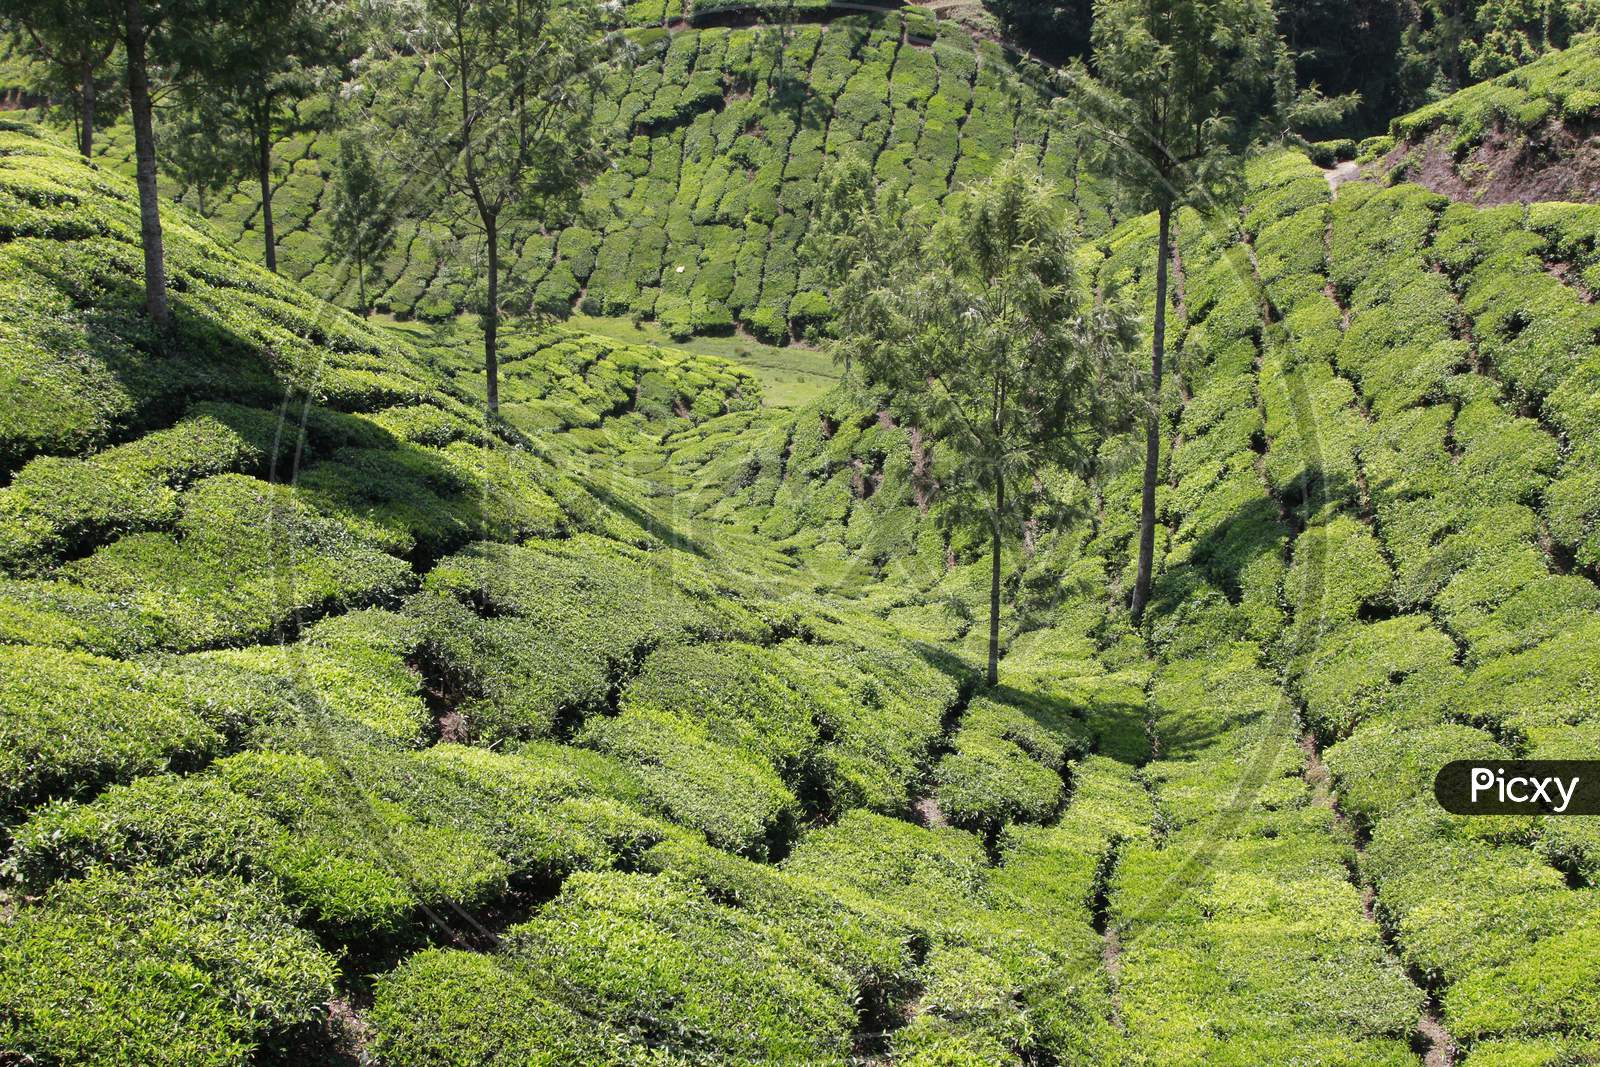 View of Tea Plantations of Munnar